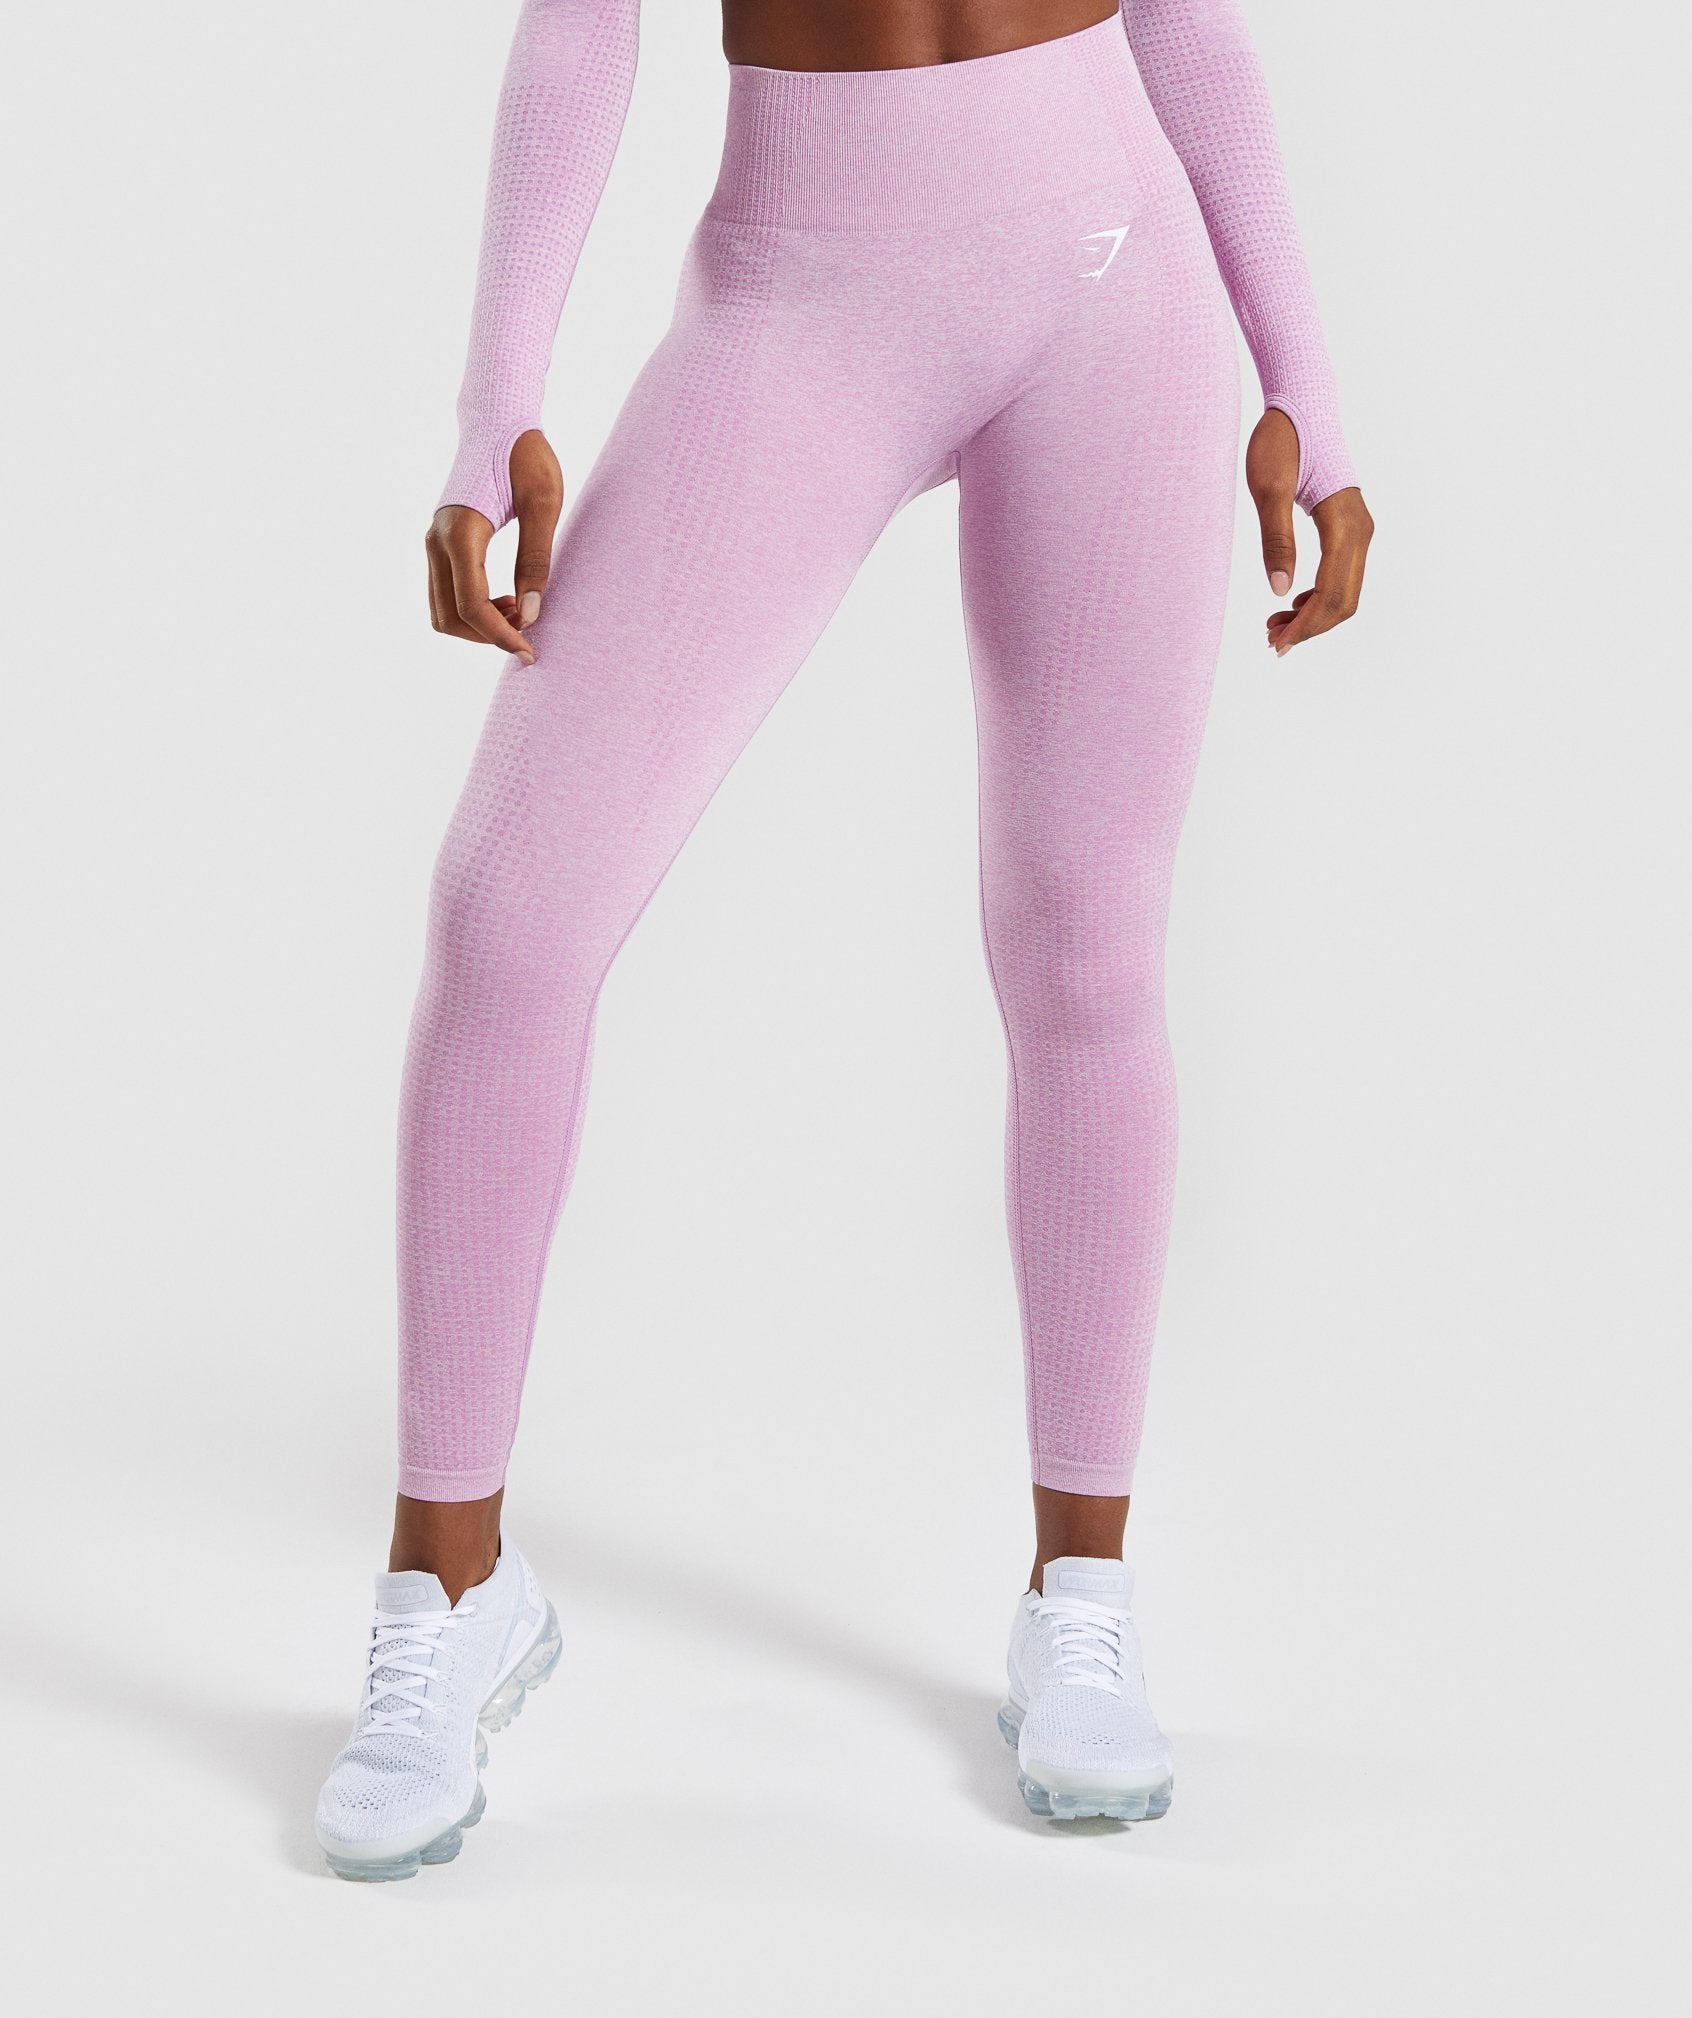 Gymshark Vital Seamless Leggings - Pink - Medium 